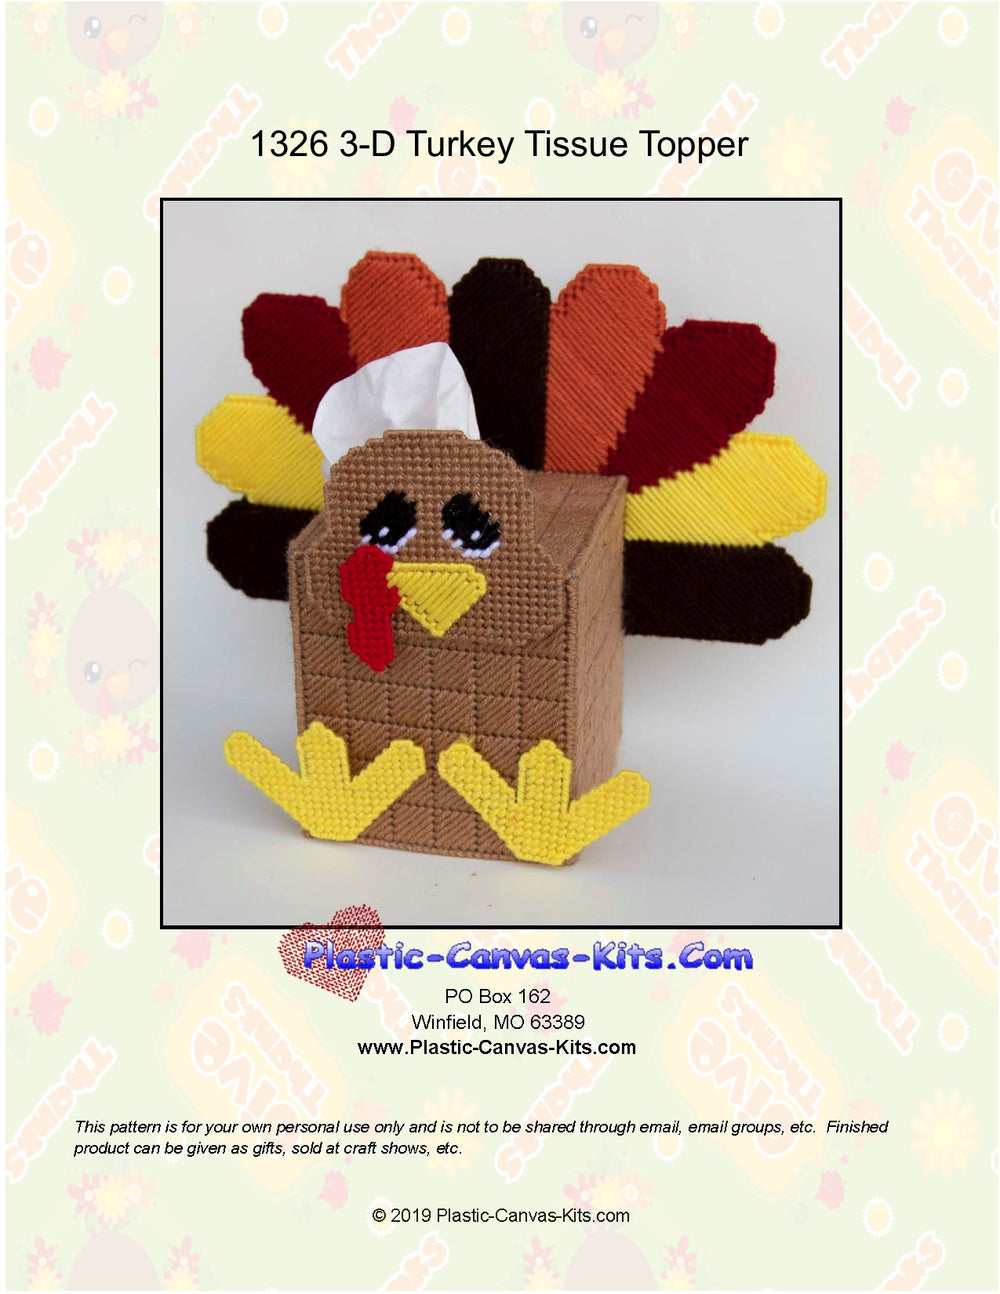 Thanksgiving Turkey 3-D Tissue Topper